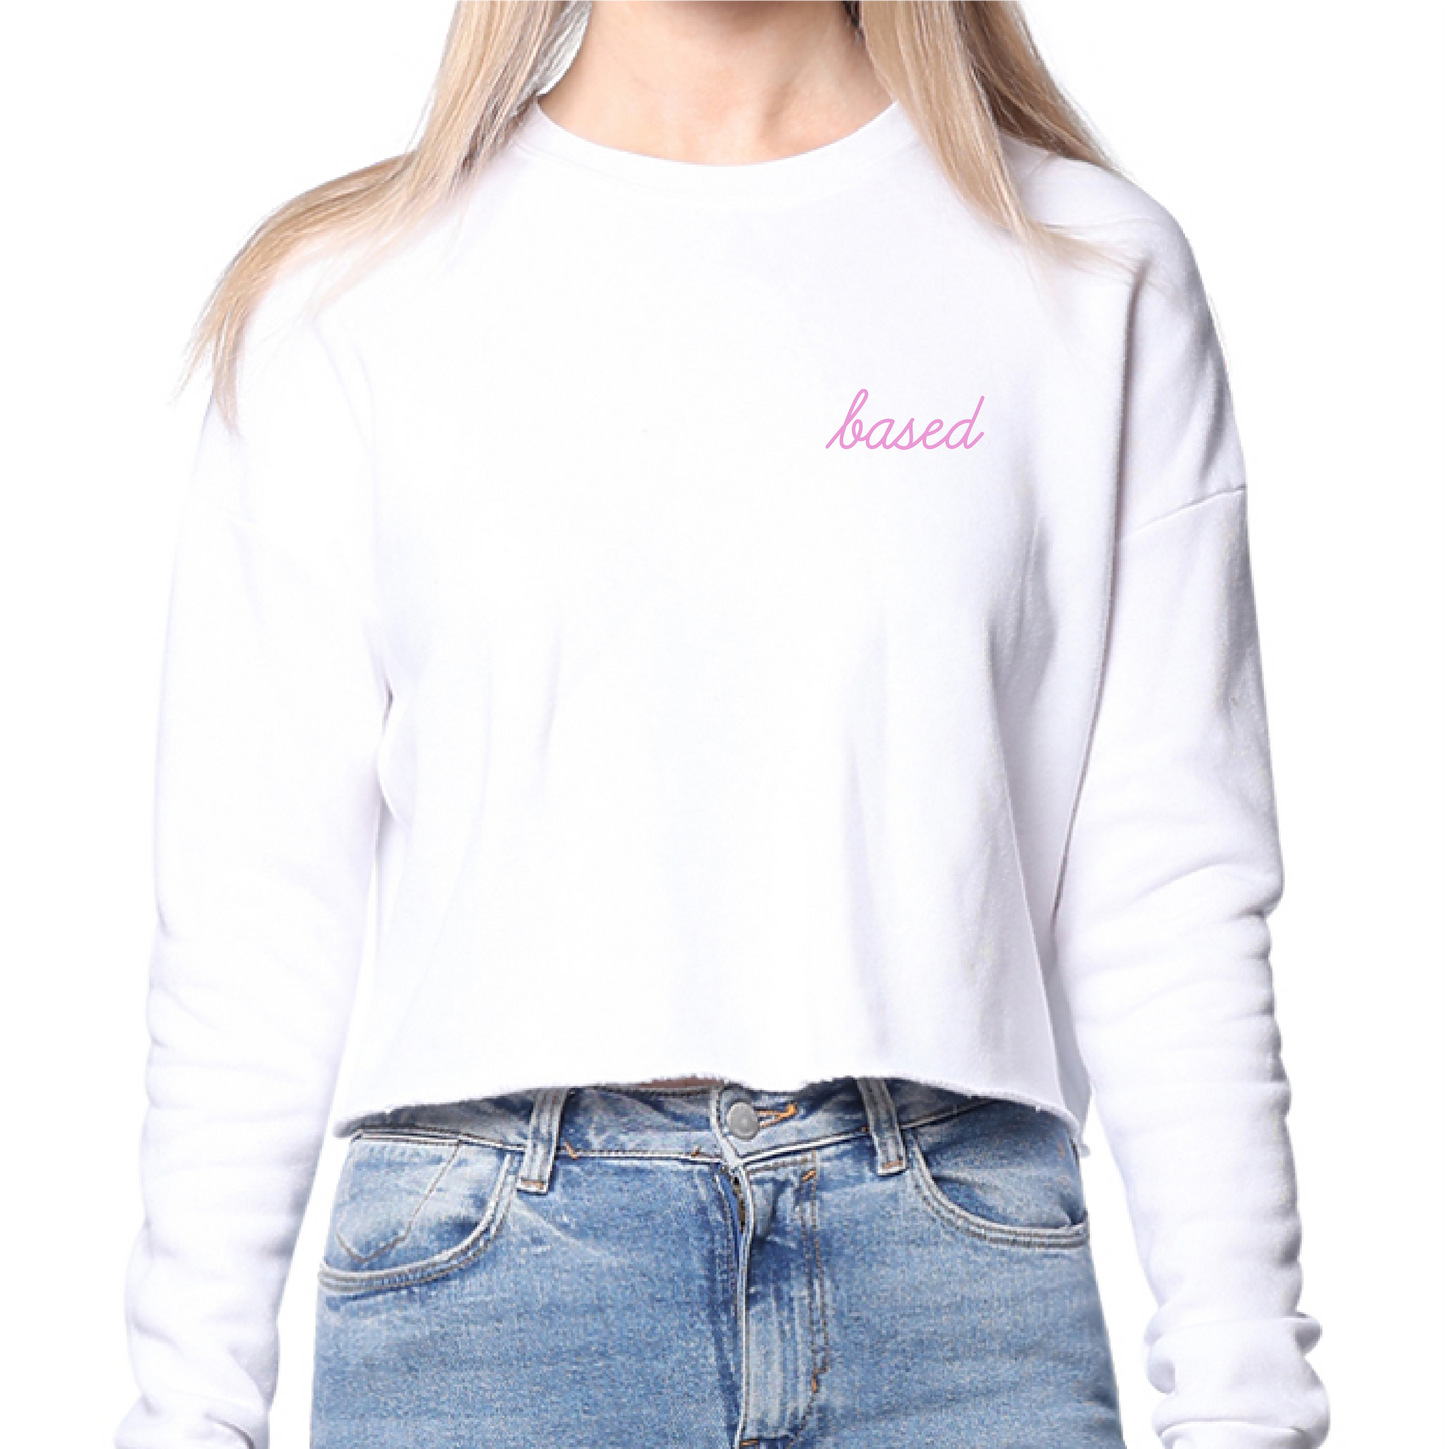 Based Fleece Crop Top Sweatshirt - White